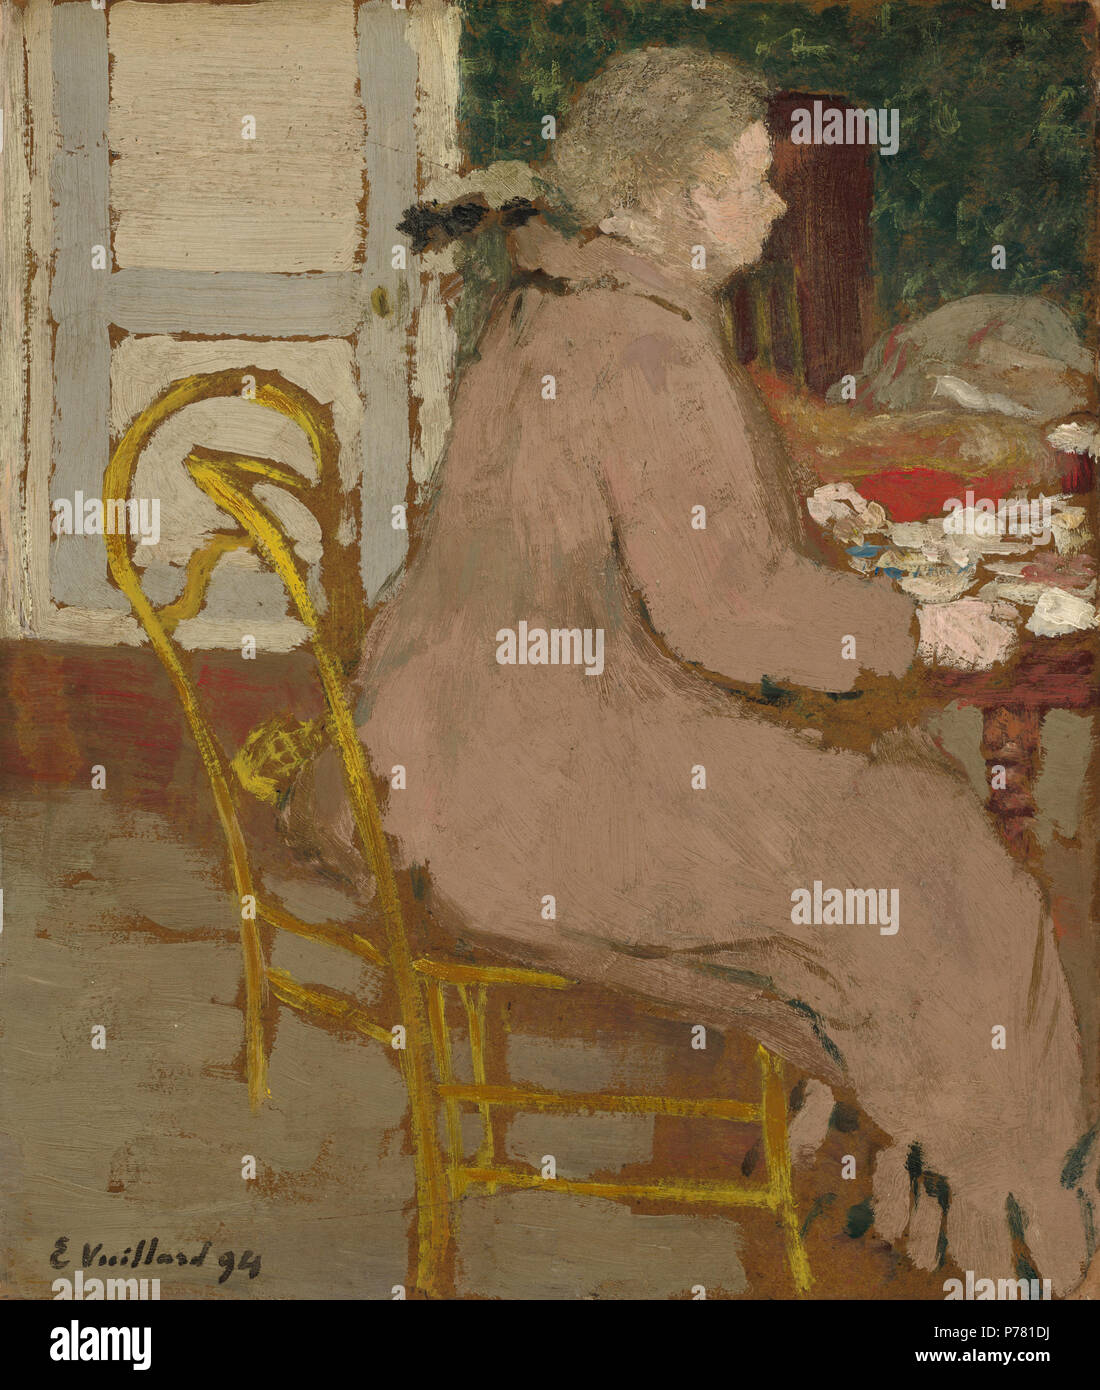 Malerei; Öl auf Pappe; gesamt: 26,9 x 22,9 cm (10 9/16 x 9 in.) gerahmt: 43,1 x 39,3 x 6,9 cm (16 15/16 x 15 1/2 x 2 11/16 in.); 6 Frühstück, Edouard Vuillard, 1894 Stockfoto